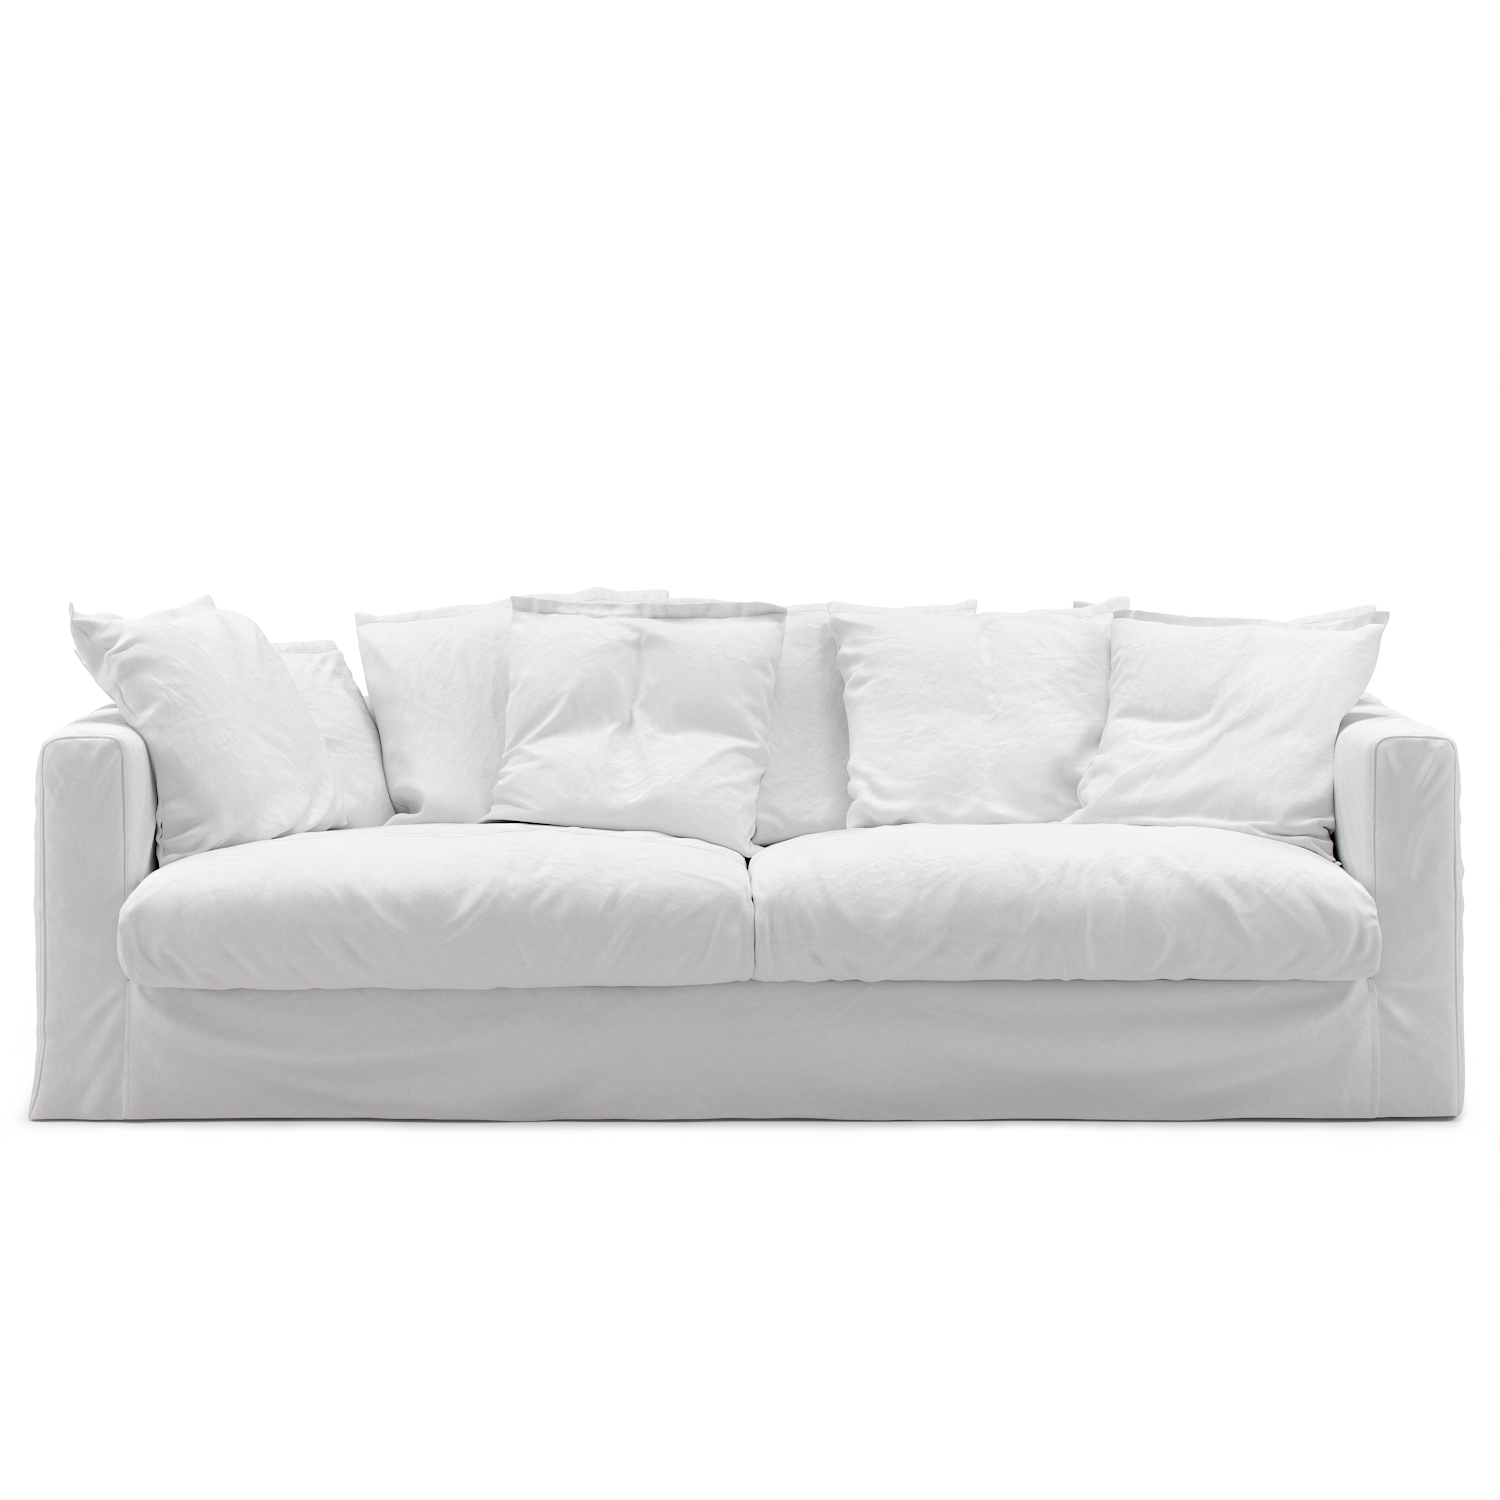 Ved navn parti slot Le Grand Air Sofa 3-Seater Cotton, White - Decotique @ RoyalDesign.co.uk